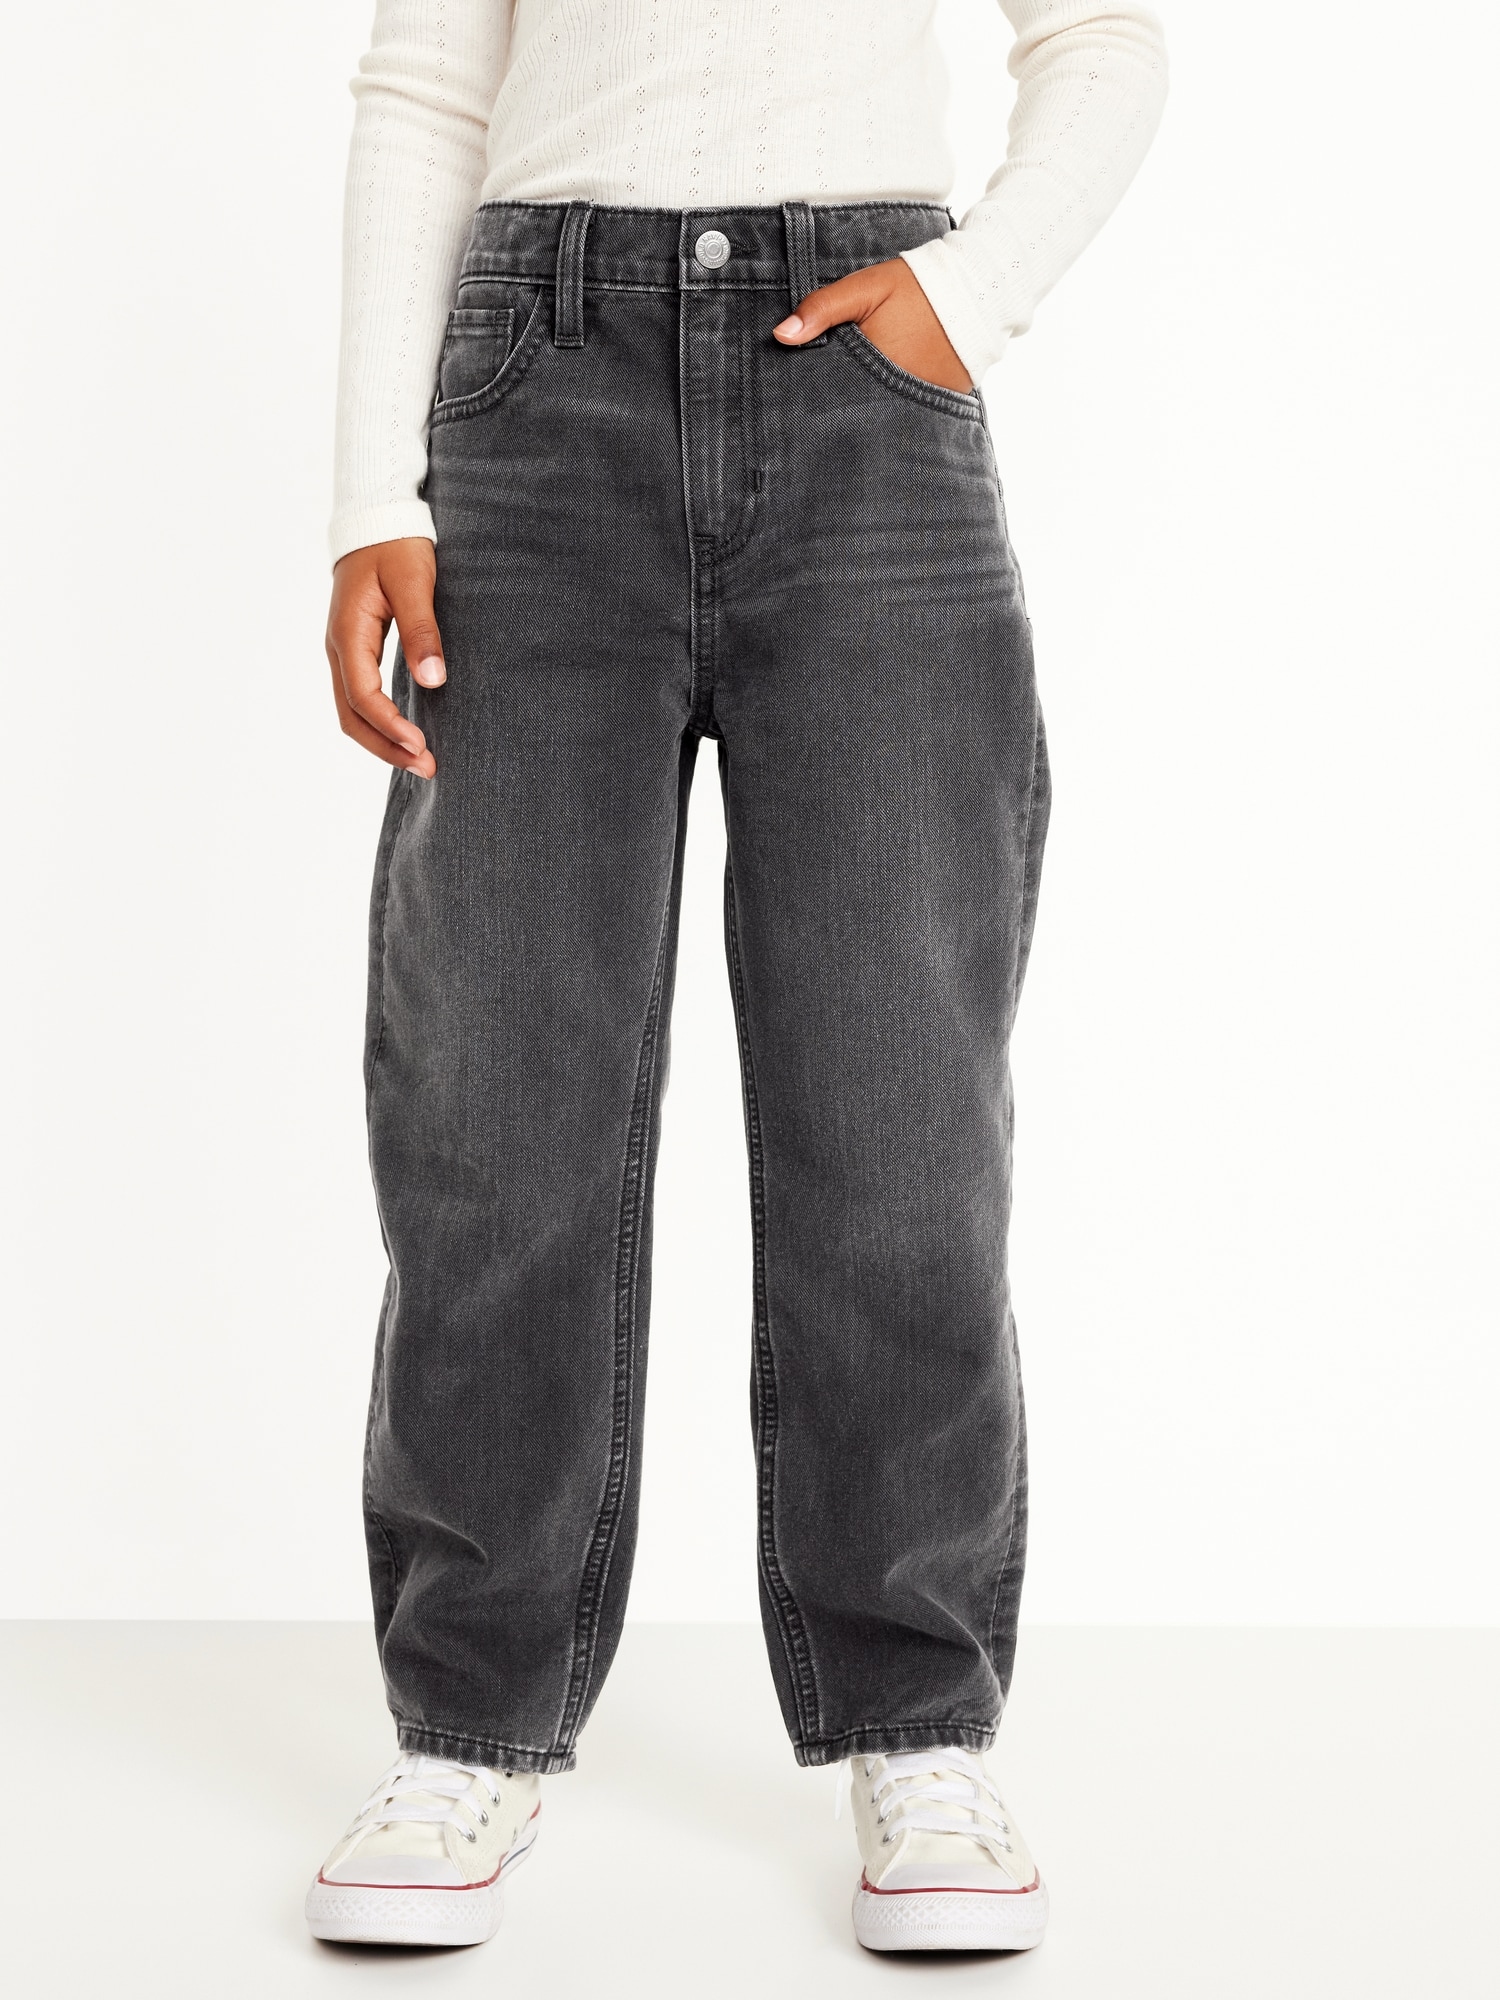 Women's Straight Jeans, Black/Dark grey